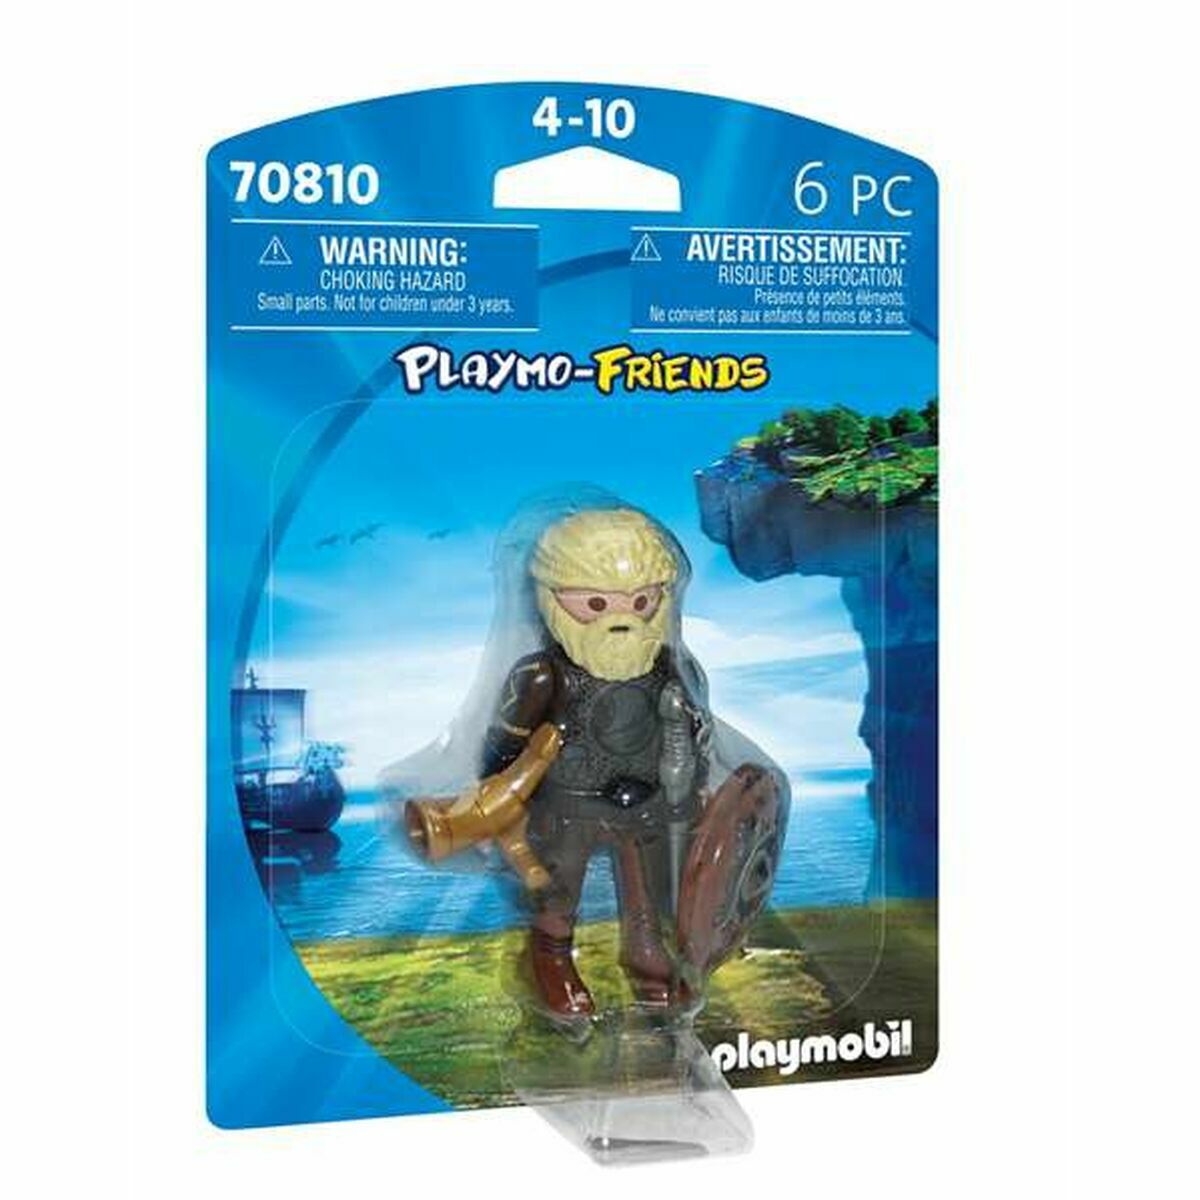 Figura îmbinată Playmobil Playmo-Friends 70810 Viking (6 pcs)